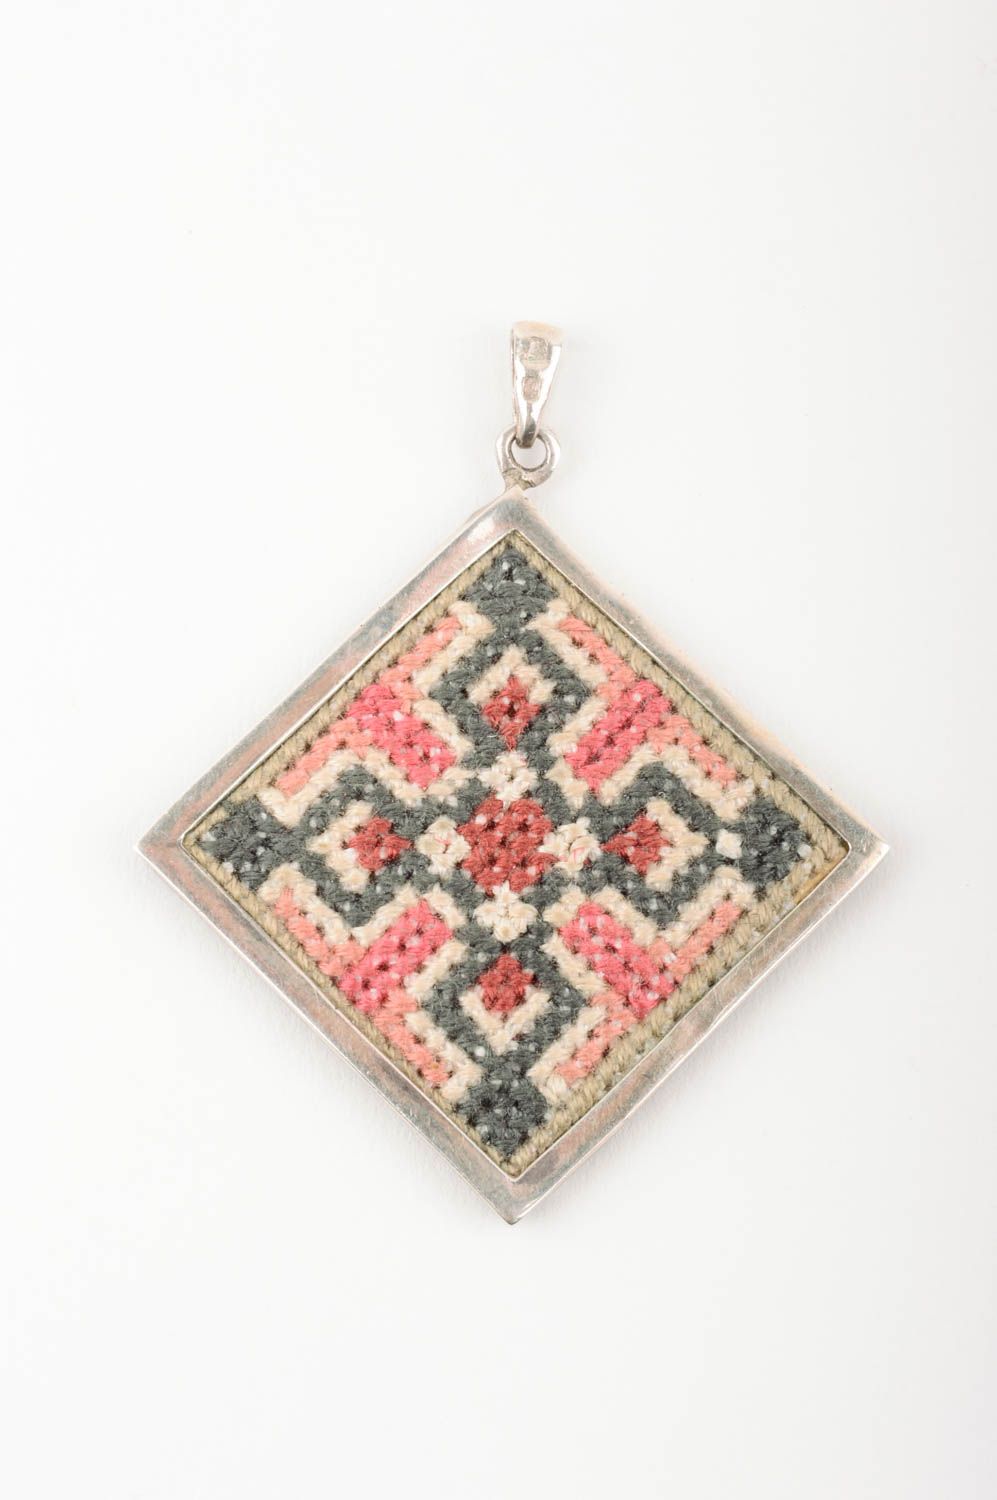 Embroidered pendant designer ethnic jewelry woman silver accessory cross-stitch photo 1